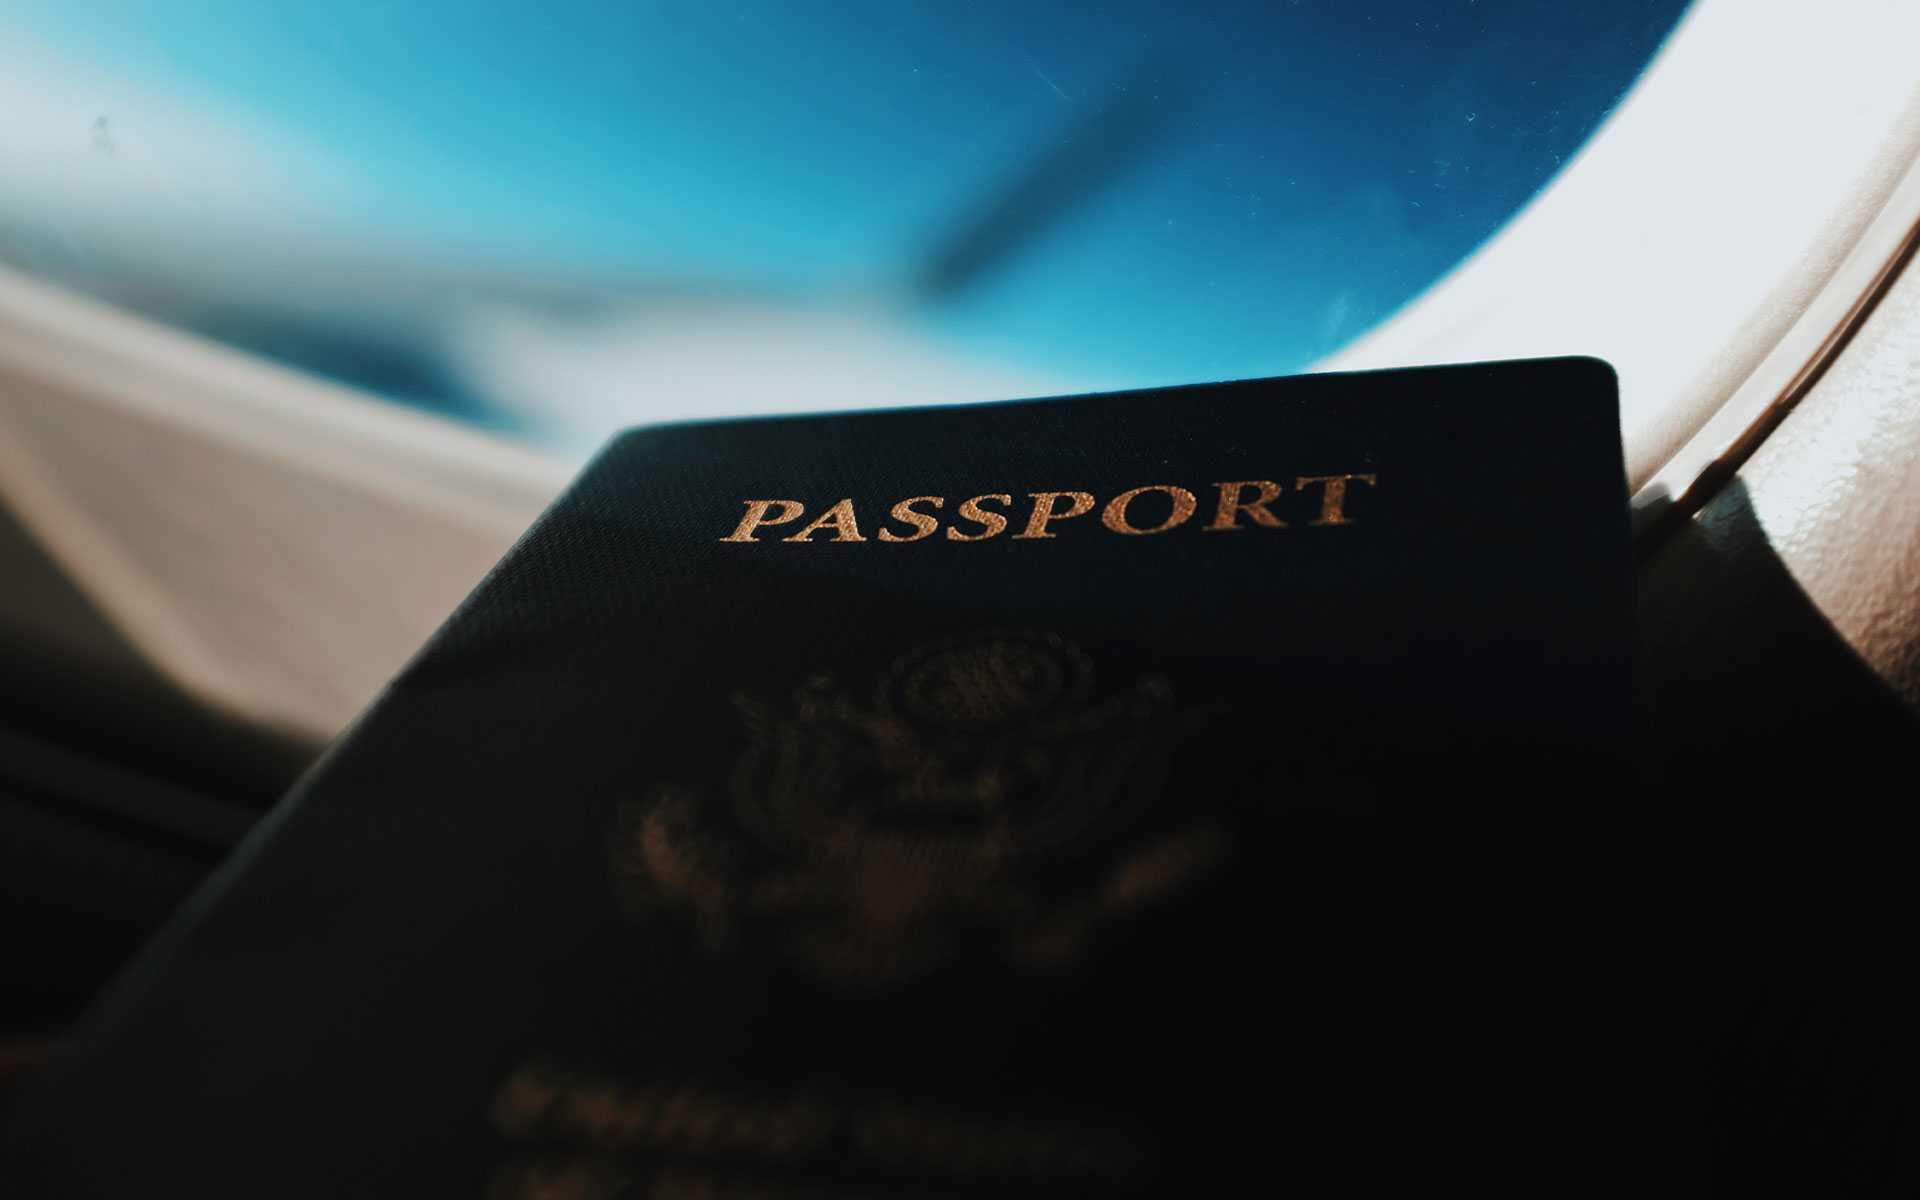 Passport infront of an airplane window